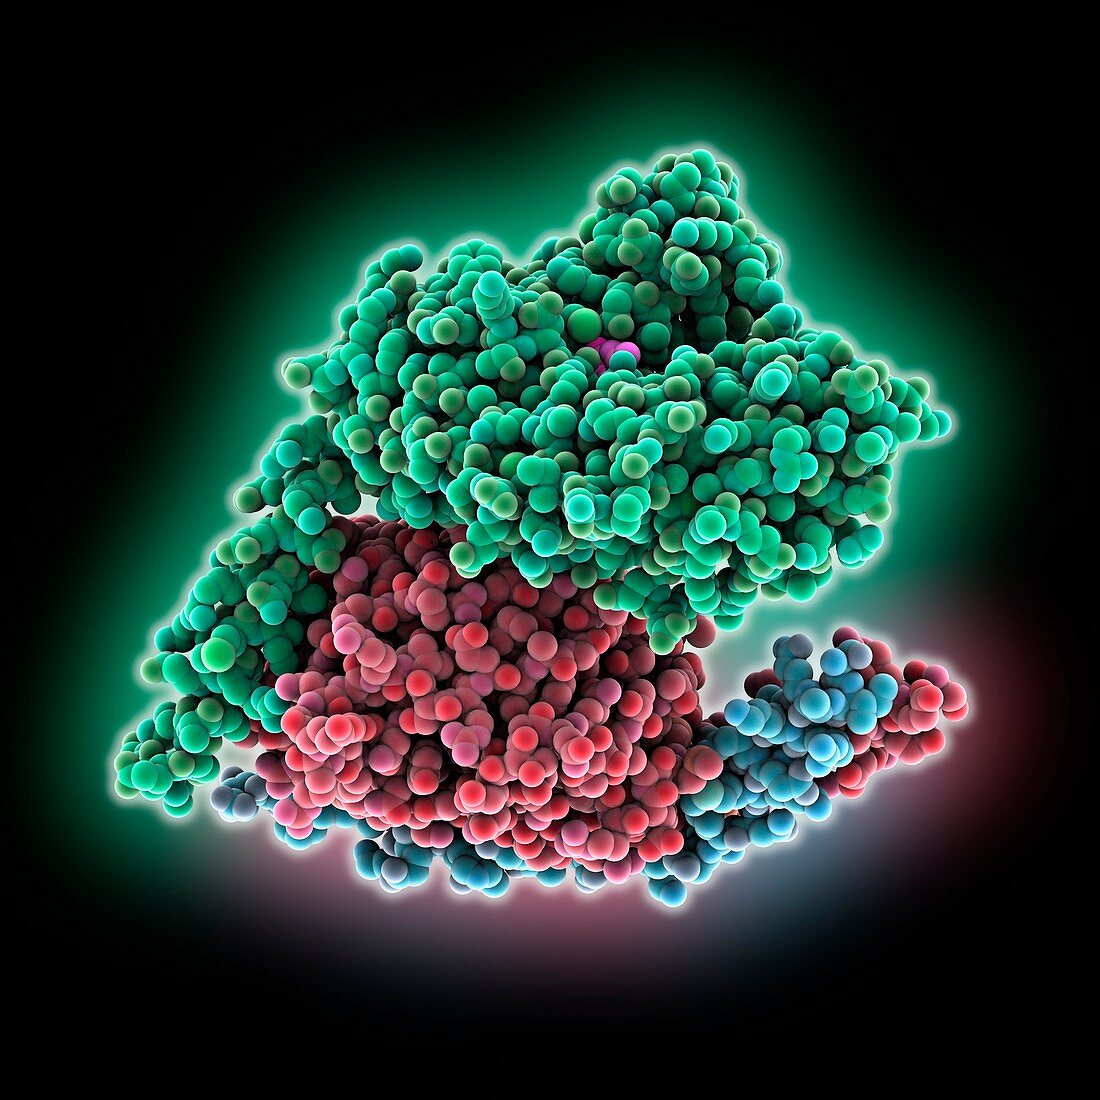 Heterotrimeric G protein complex molecule